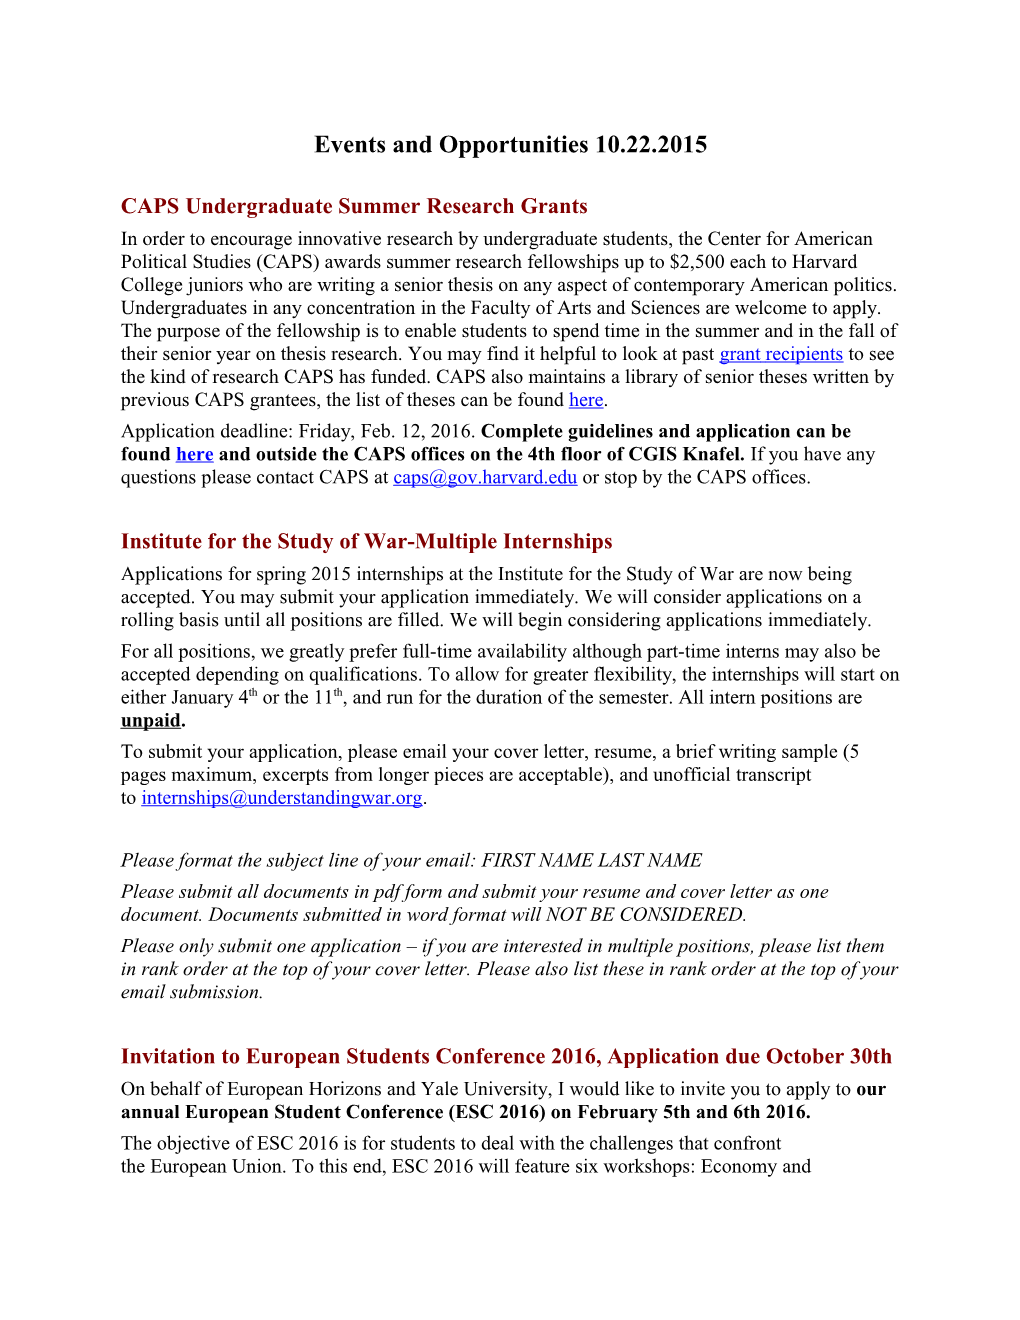 CAPS Undergraduate Summer Research Grants